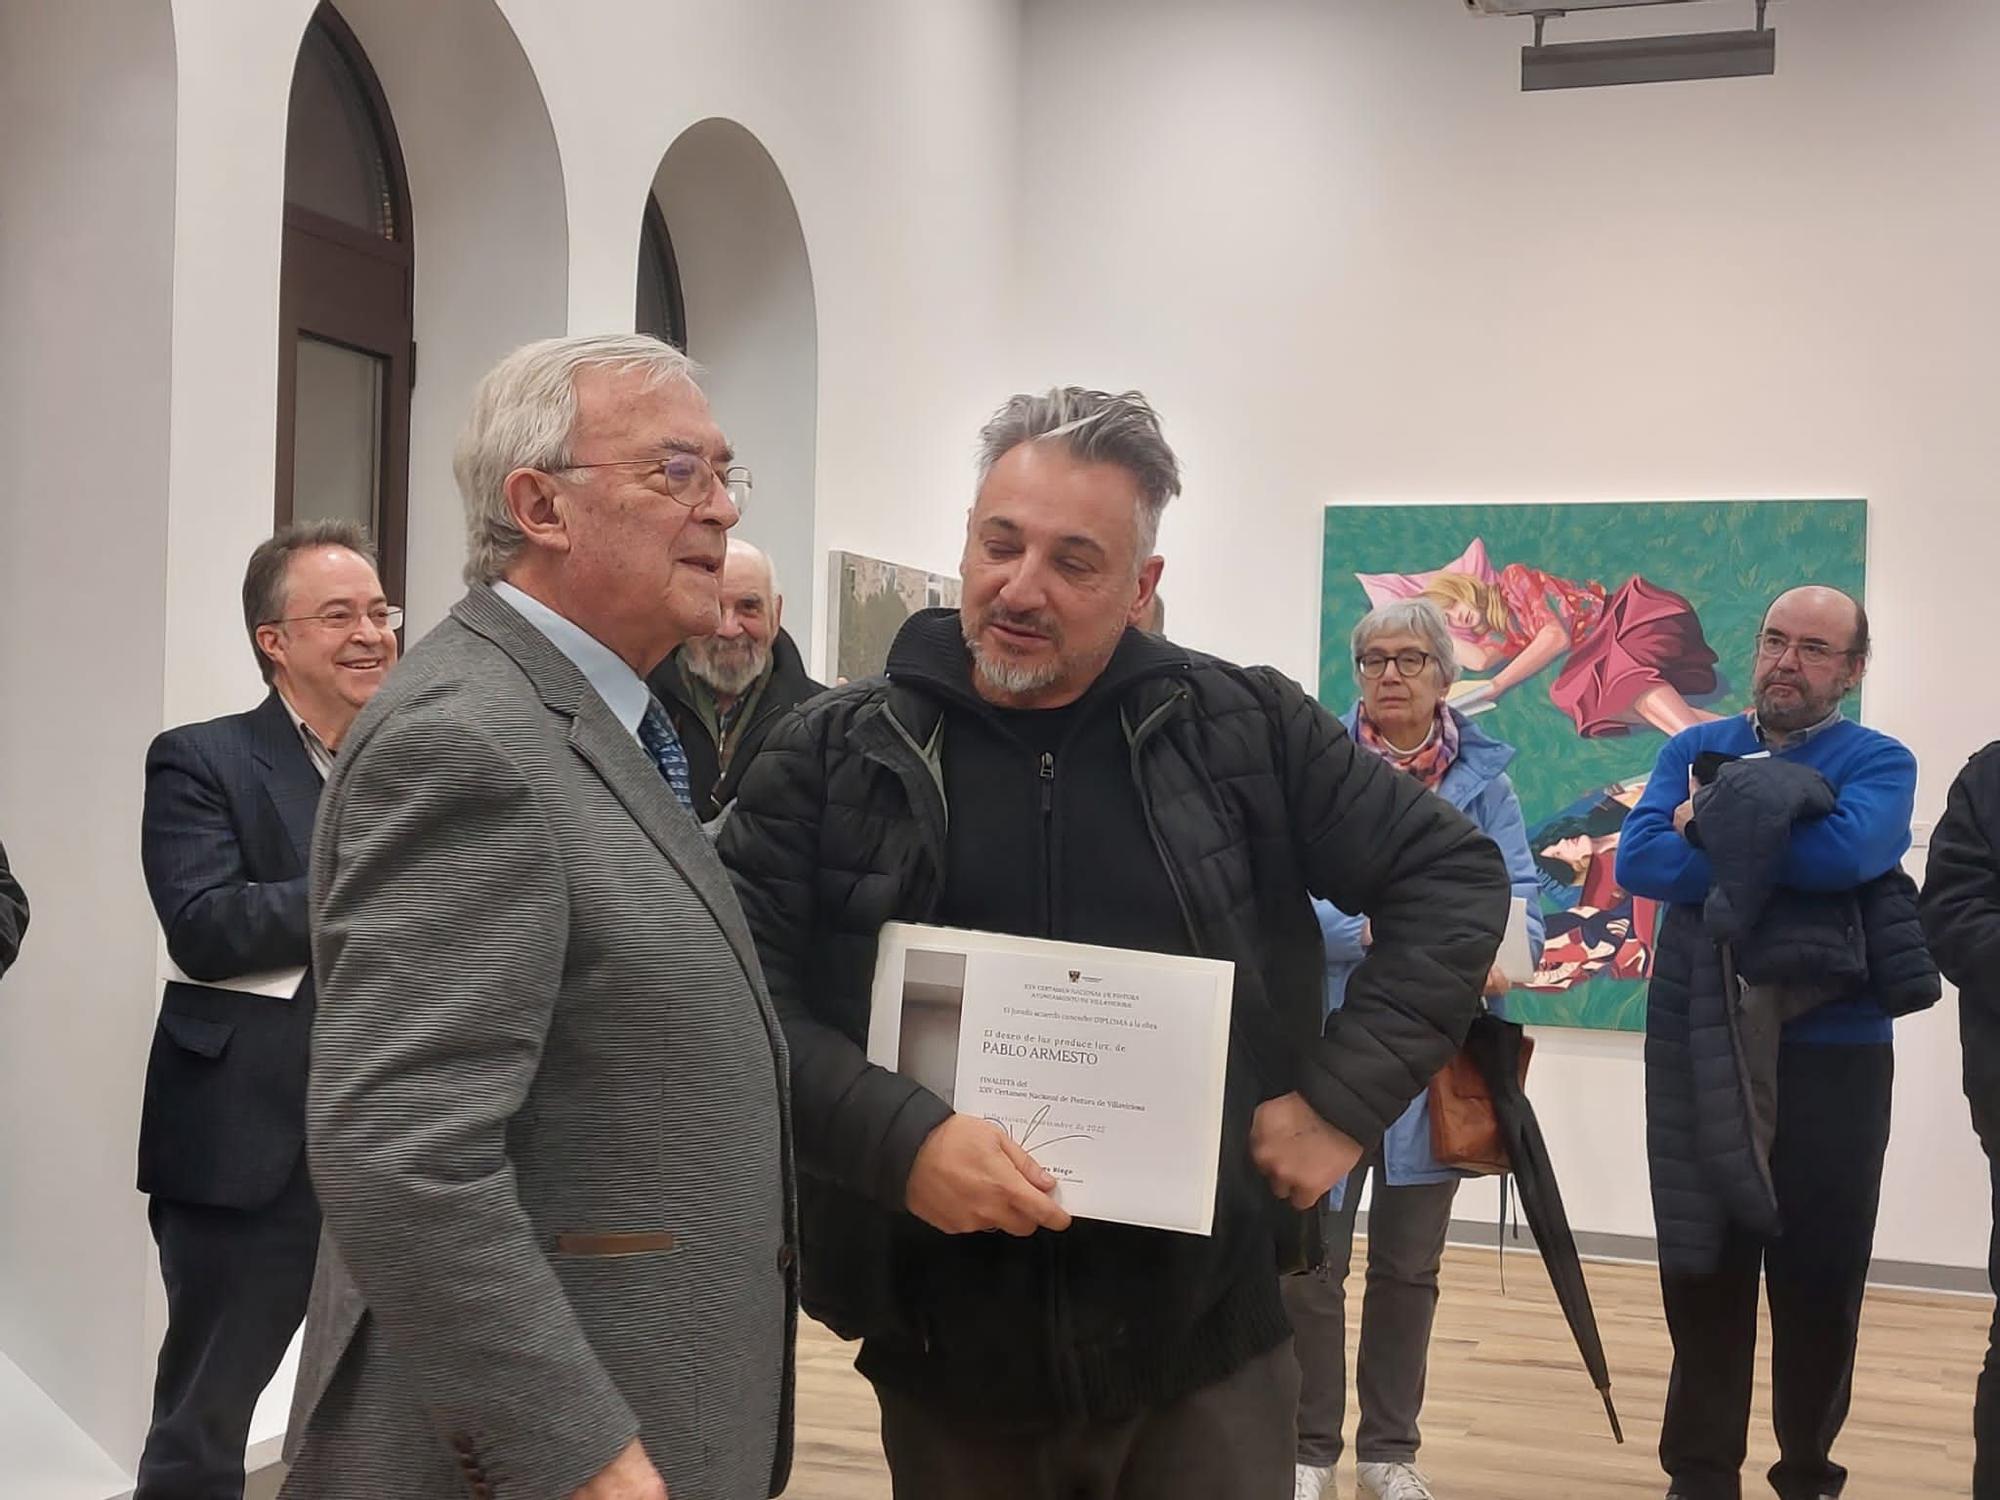 Teruhiro Ando, ganador del Certamen Nacional de Pintura de Villaviciosa, recogió la "Manzana de Plata"